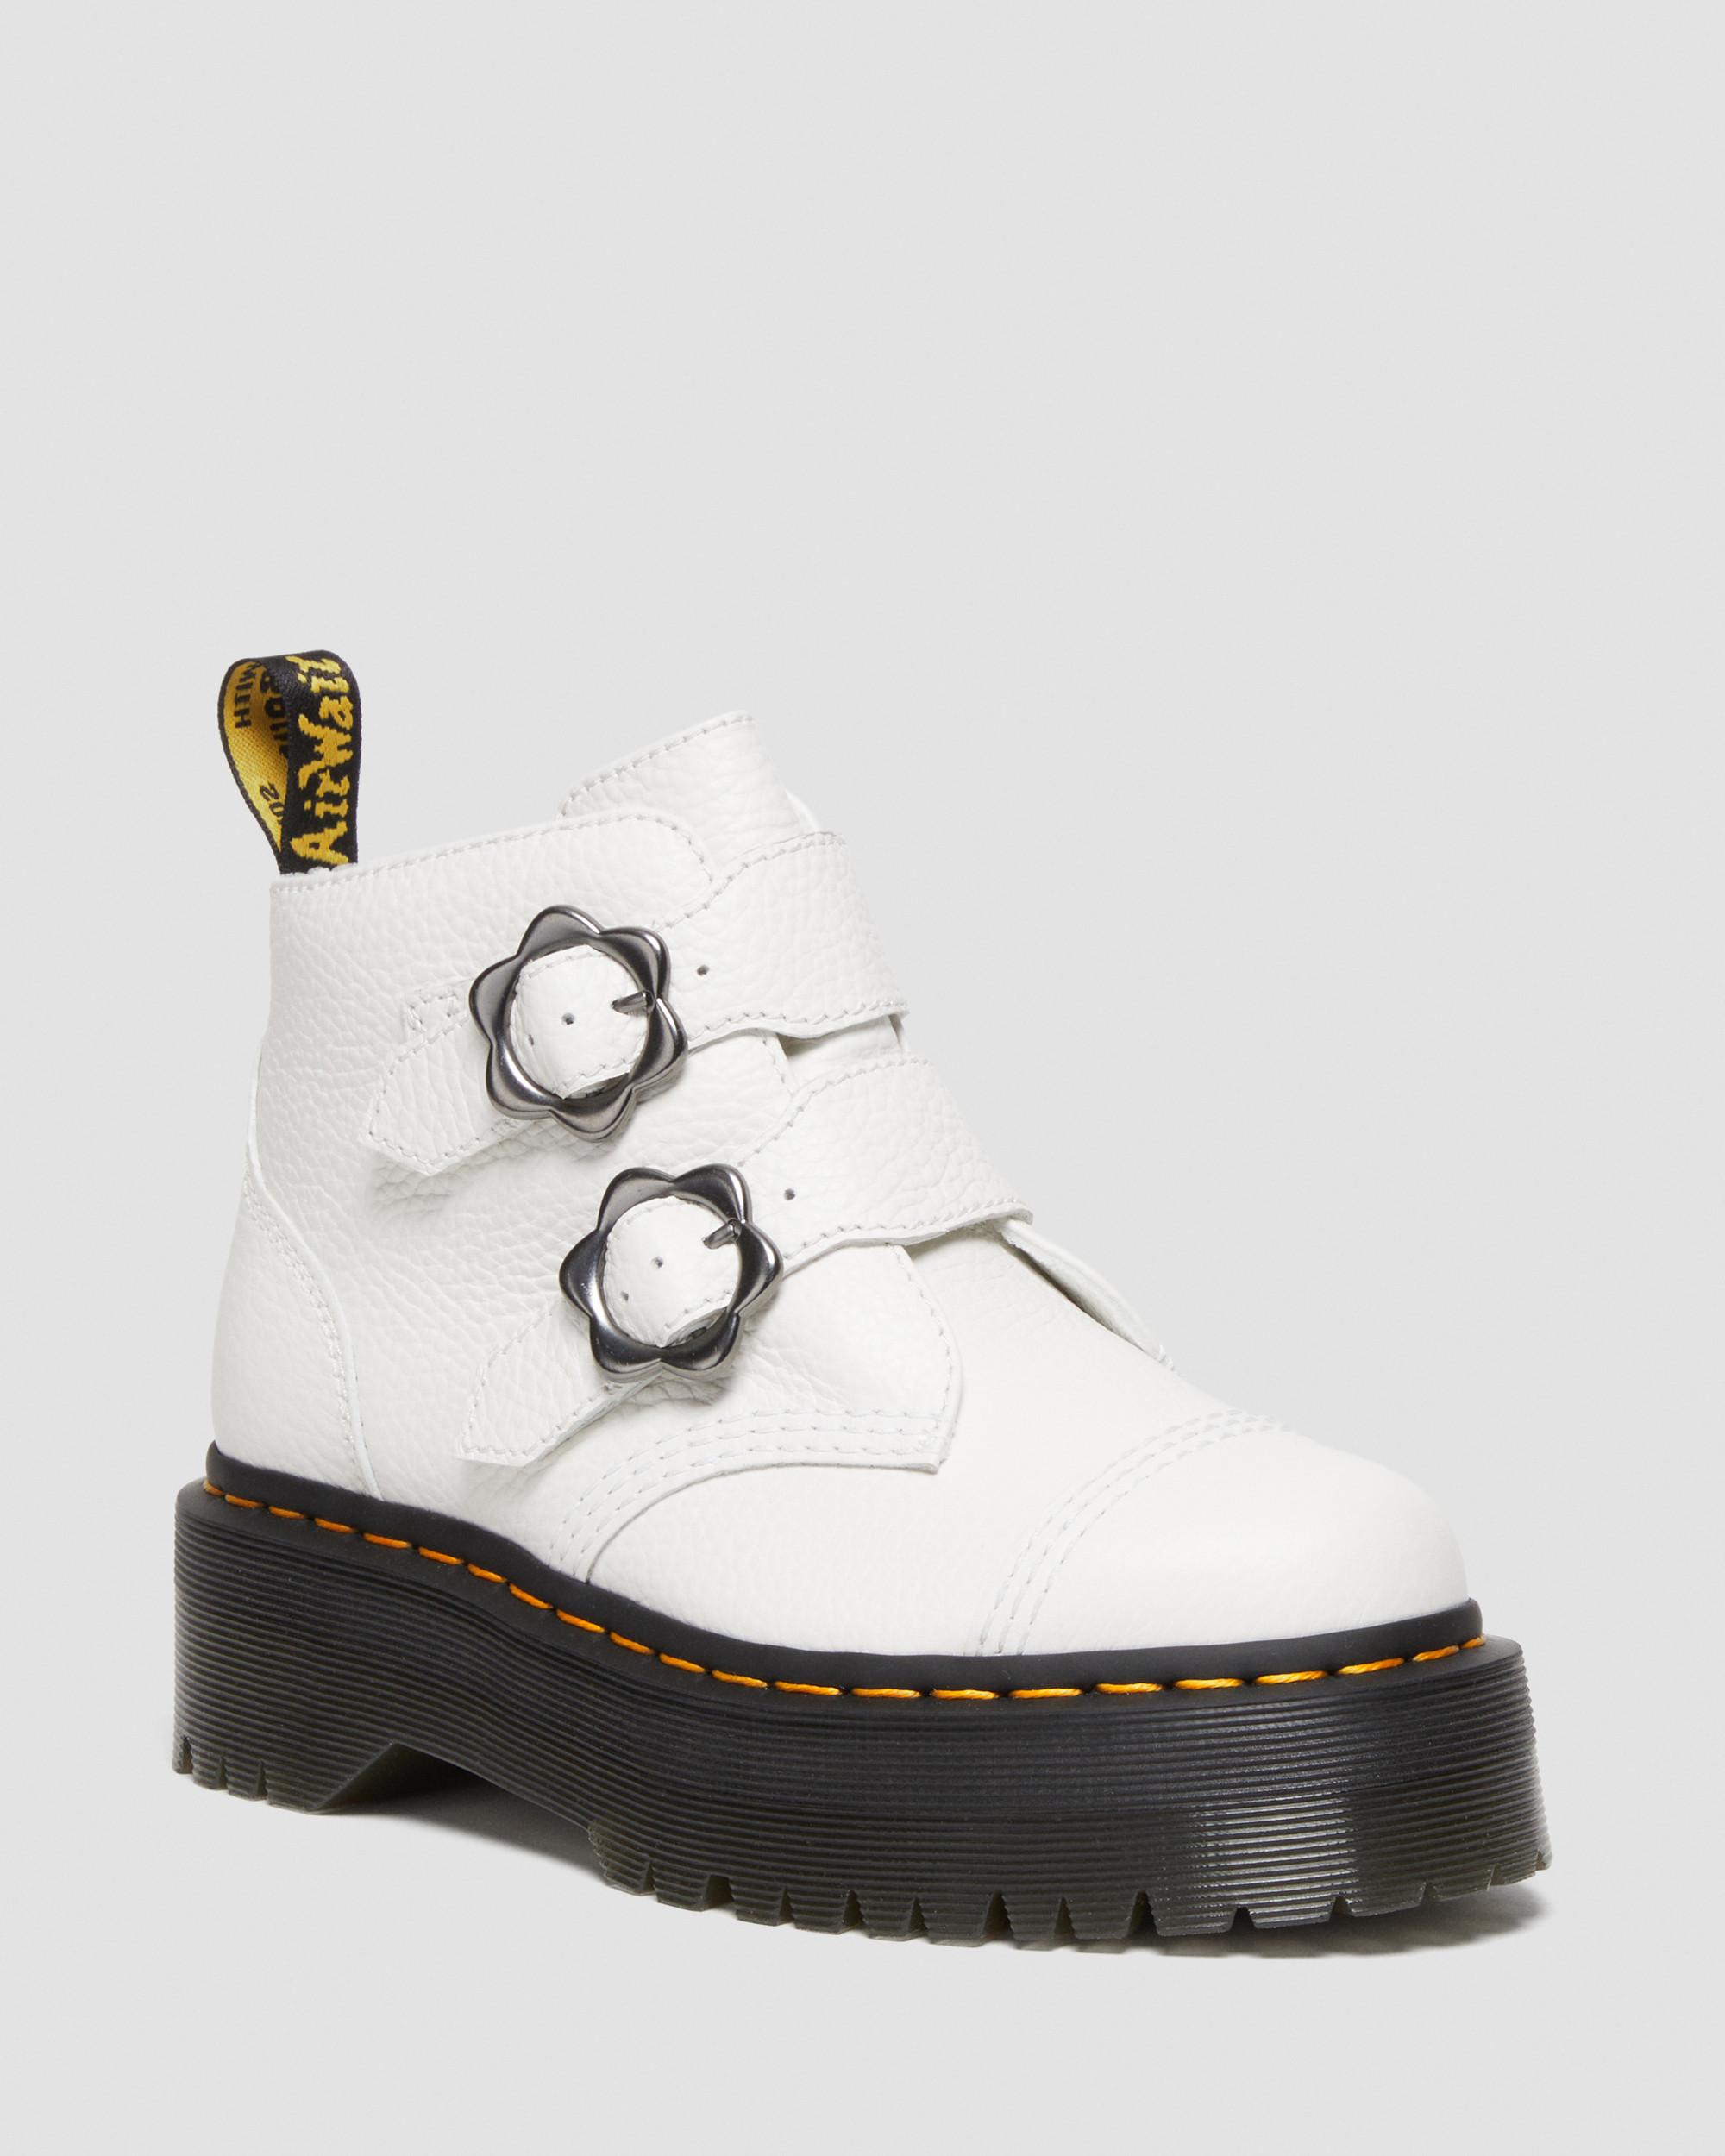 White Boots, Shoes & Sandals, Monochrome